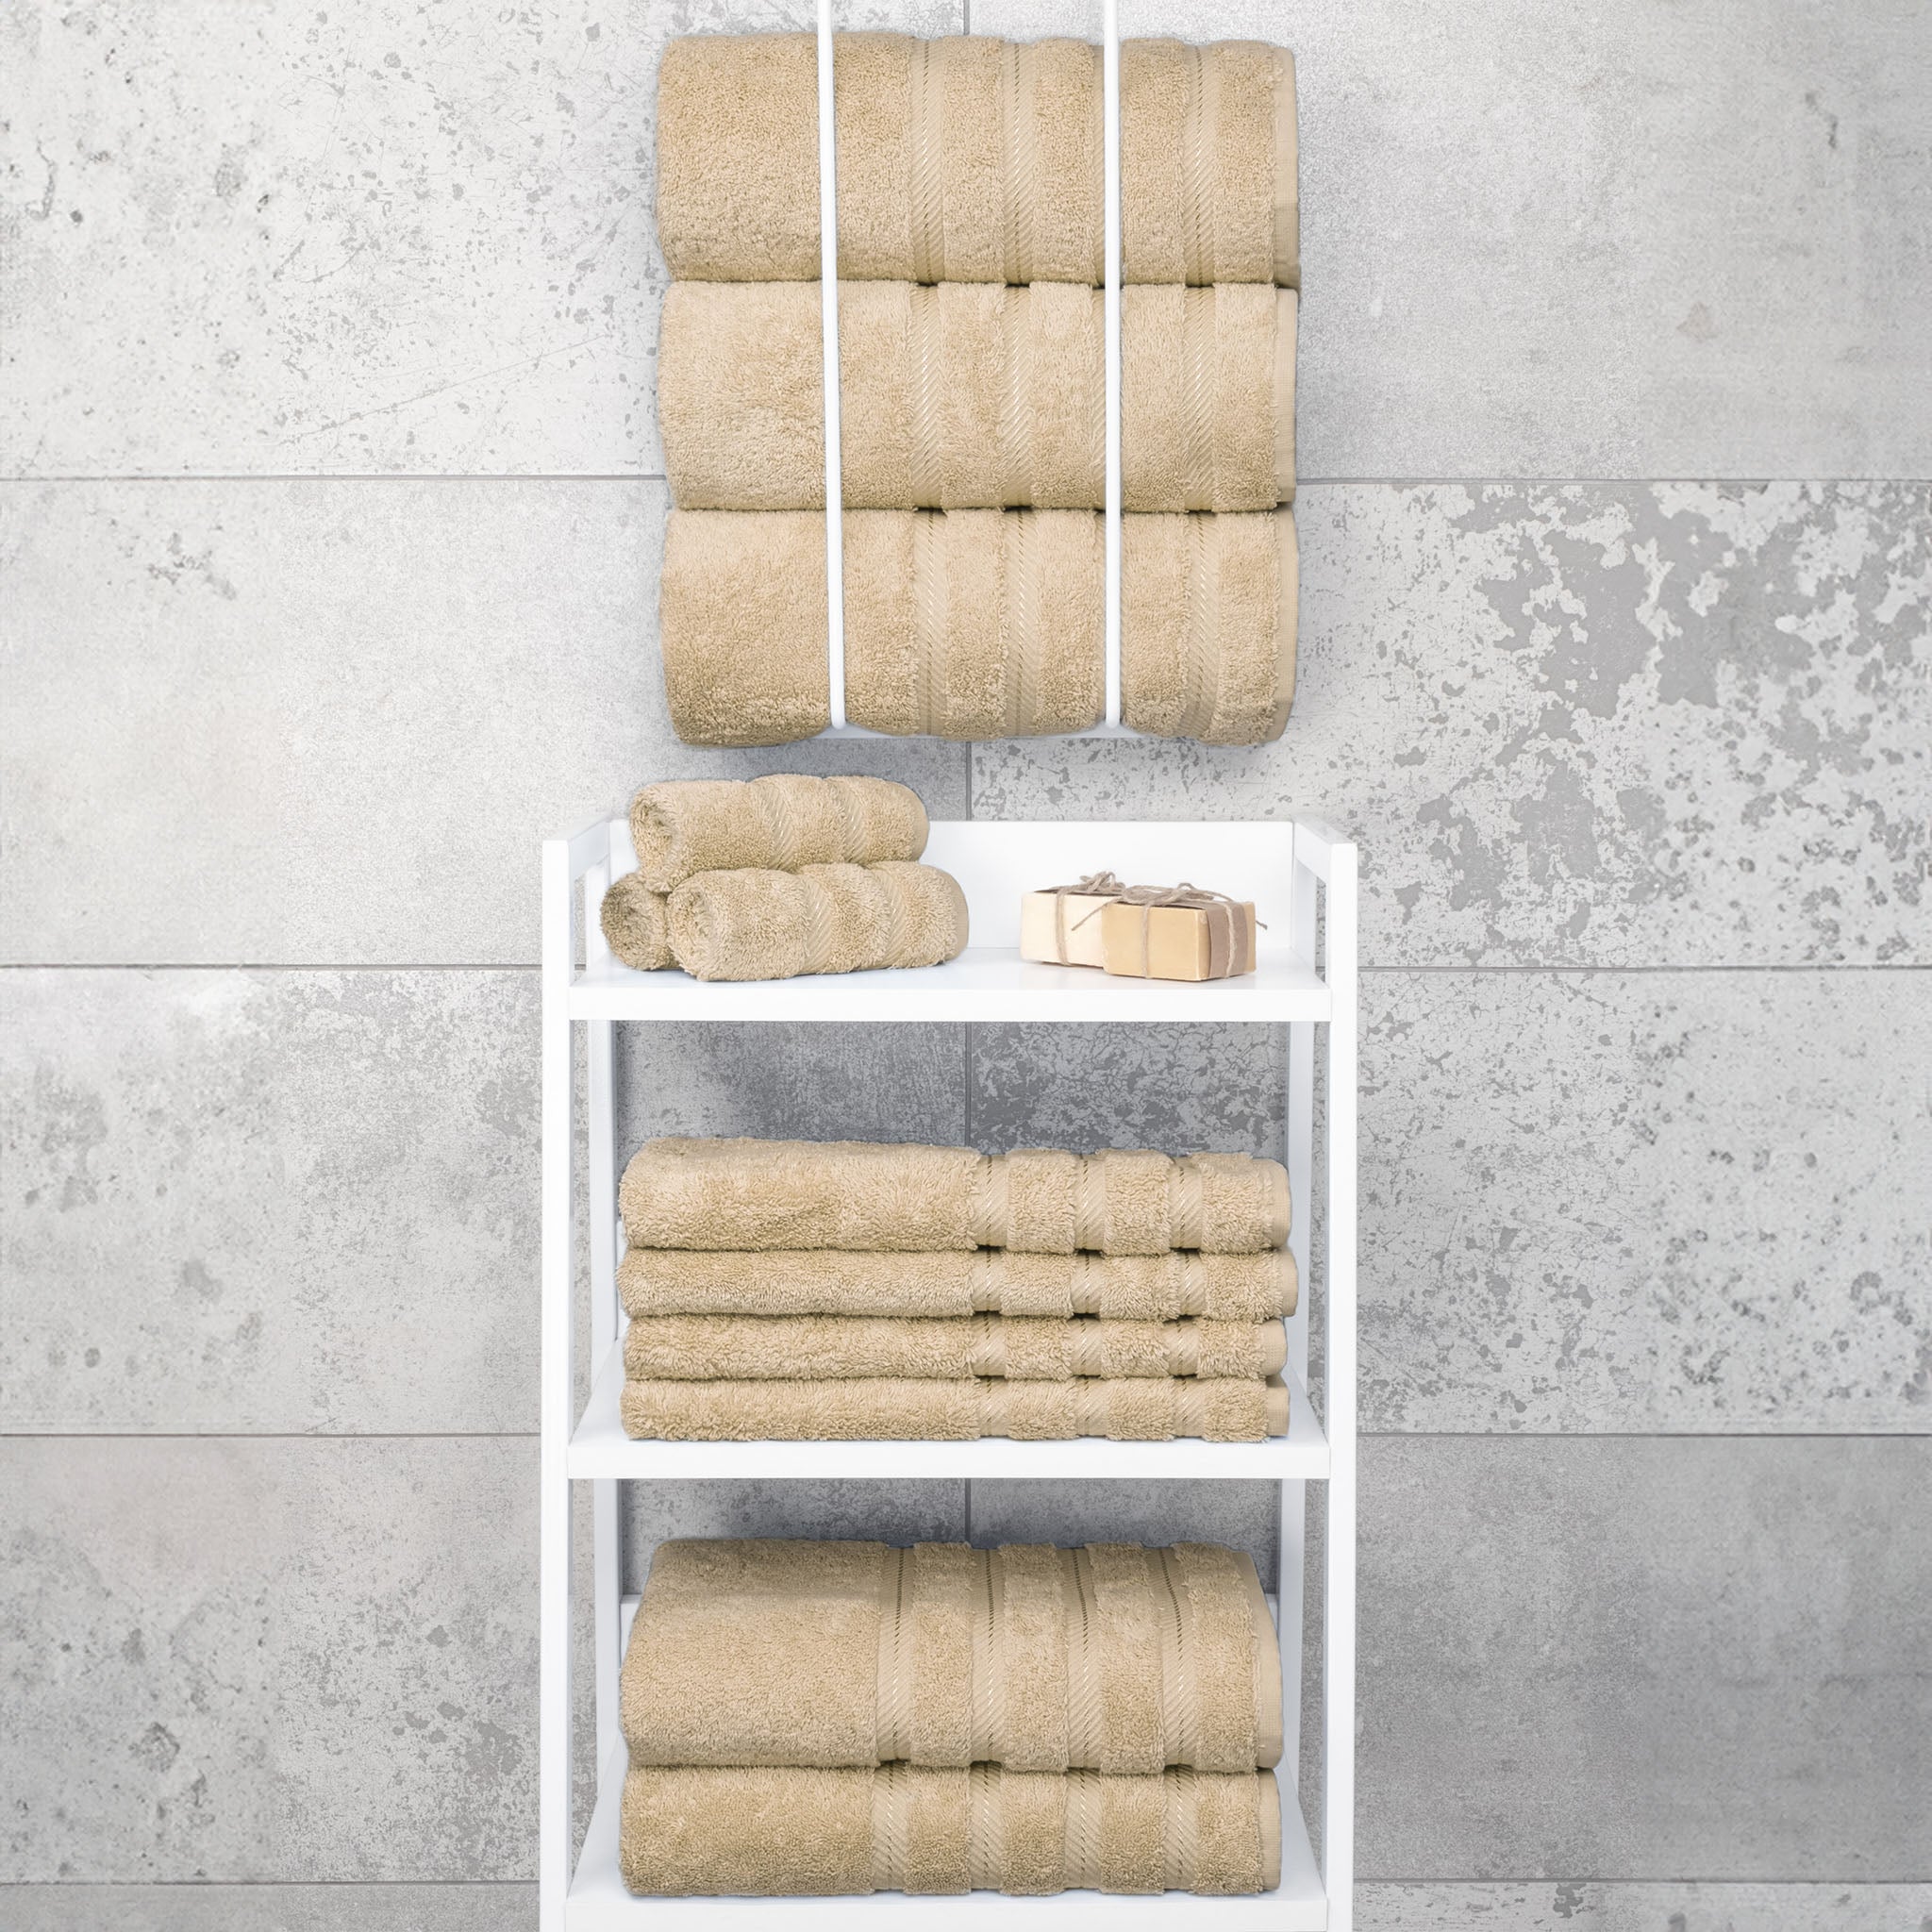 American Soft Linen 100% Turkish Cotton 4 Pack Bath Towel Set Wholesale sand-taupe-7